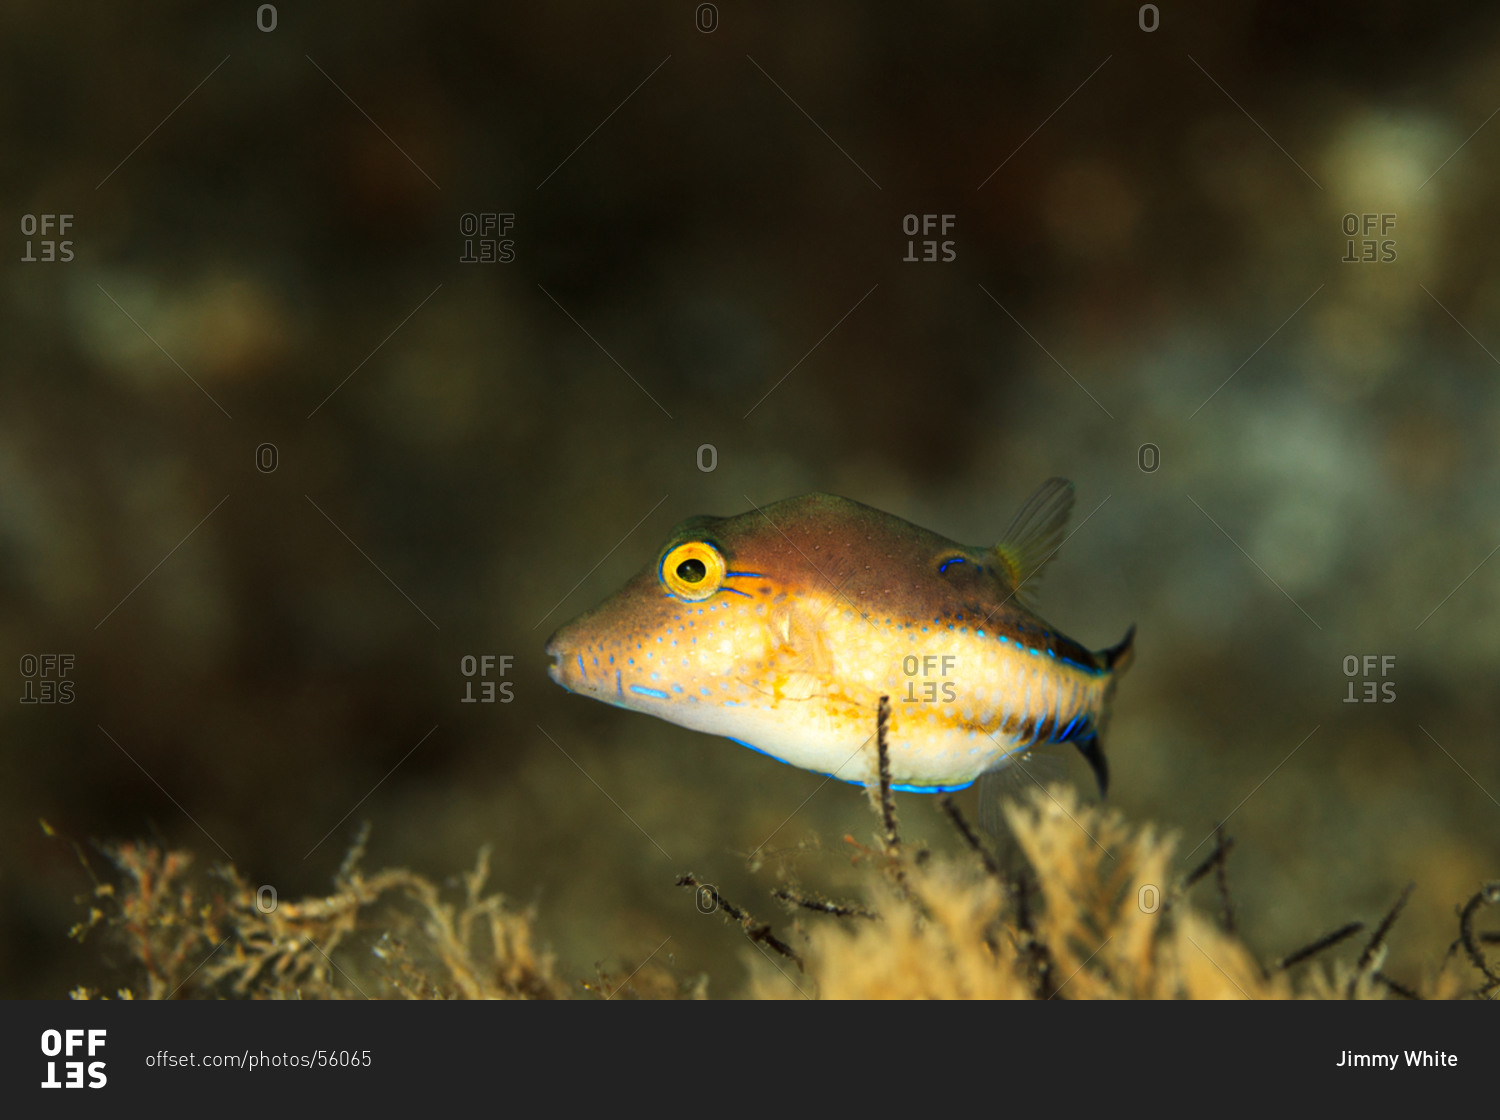 Portrait of a colorful fish